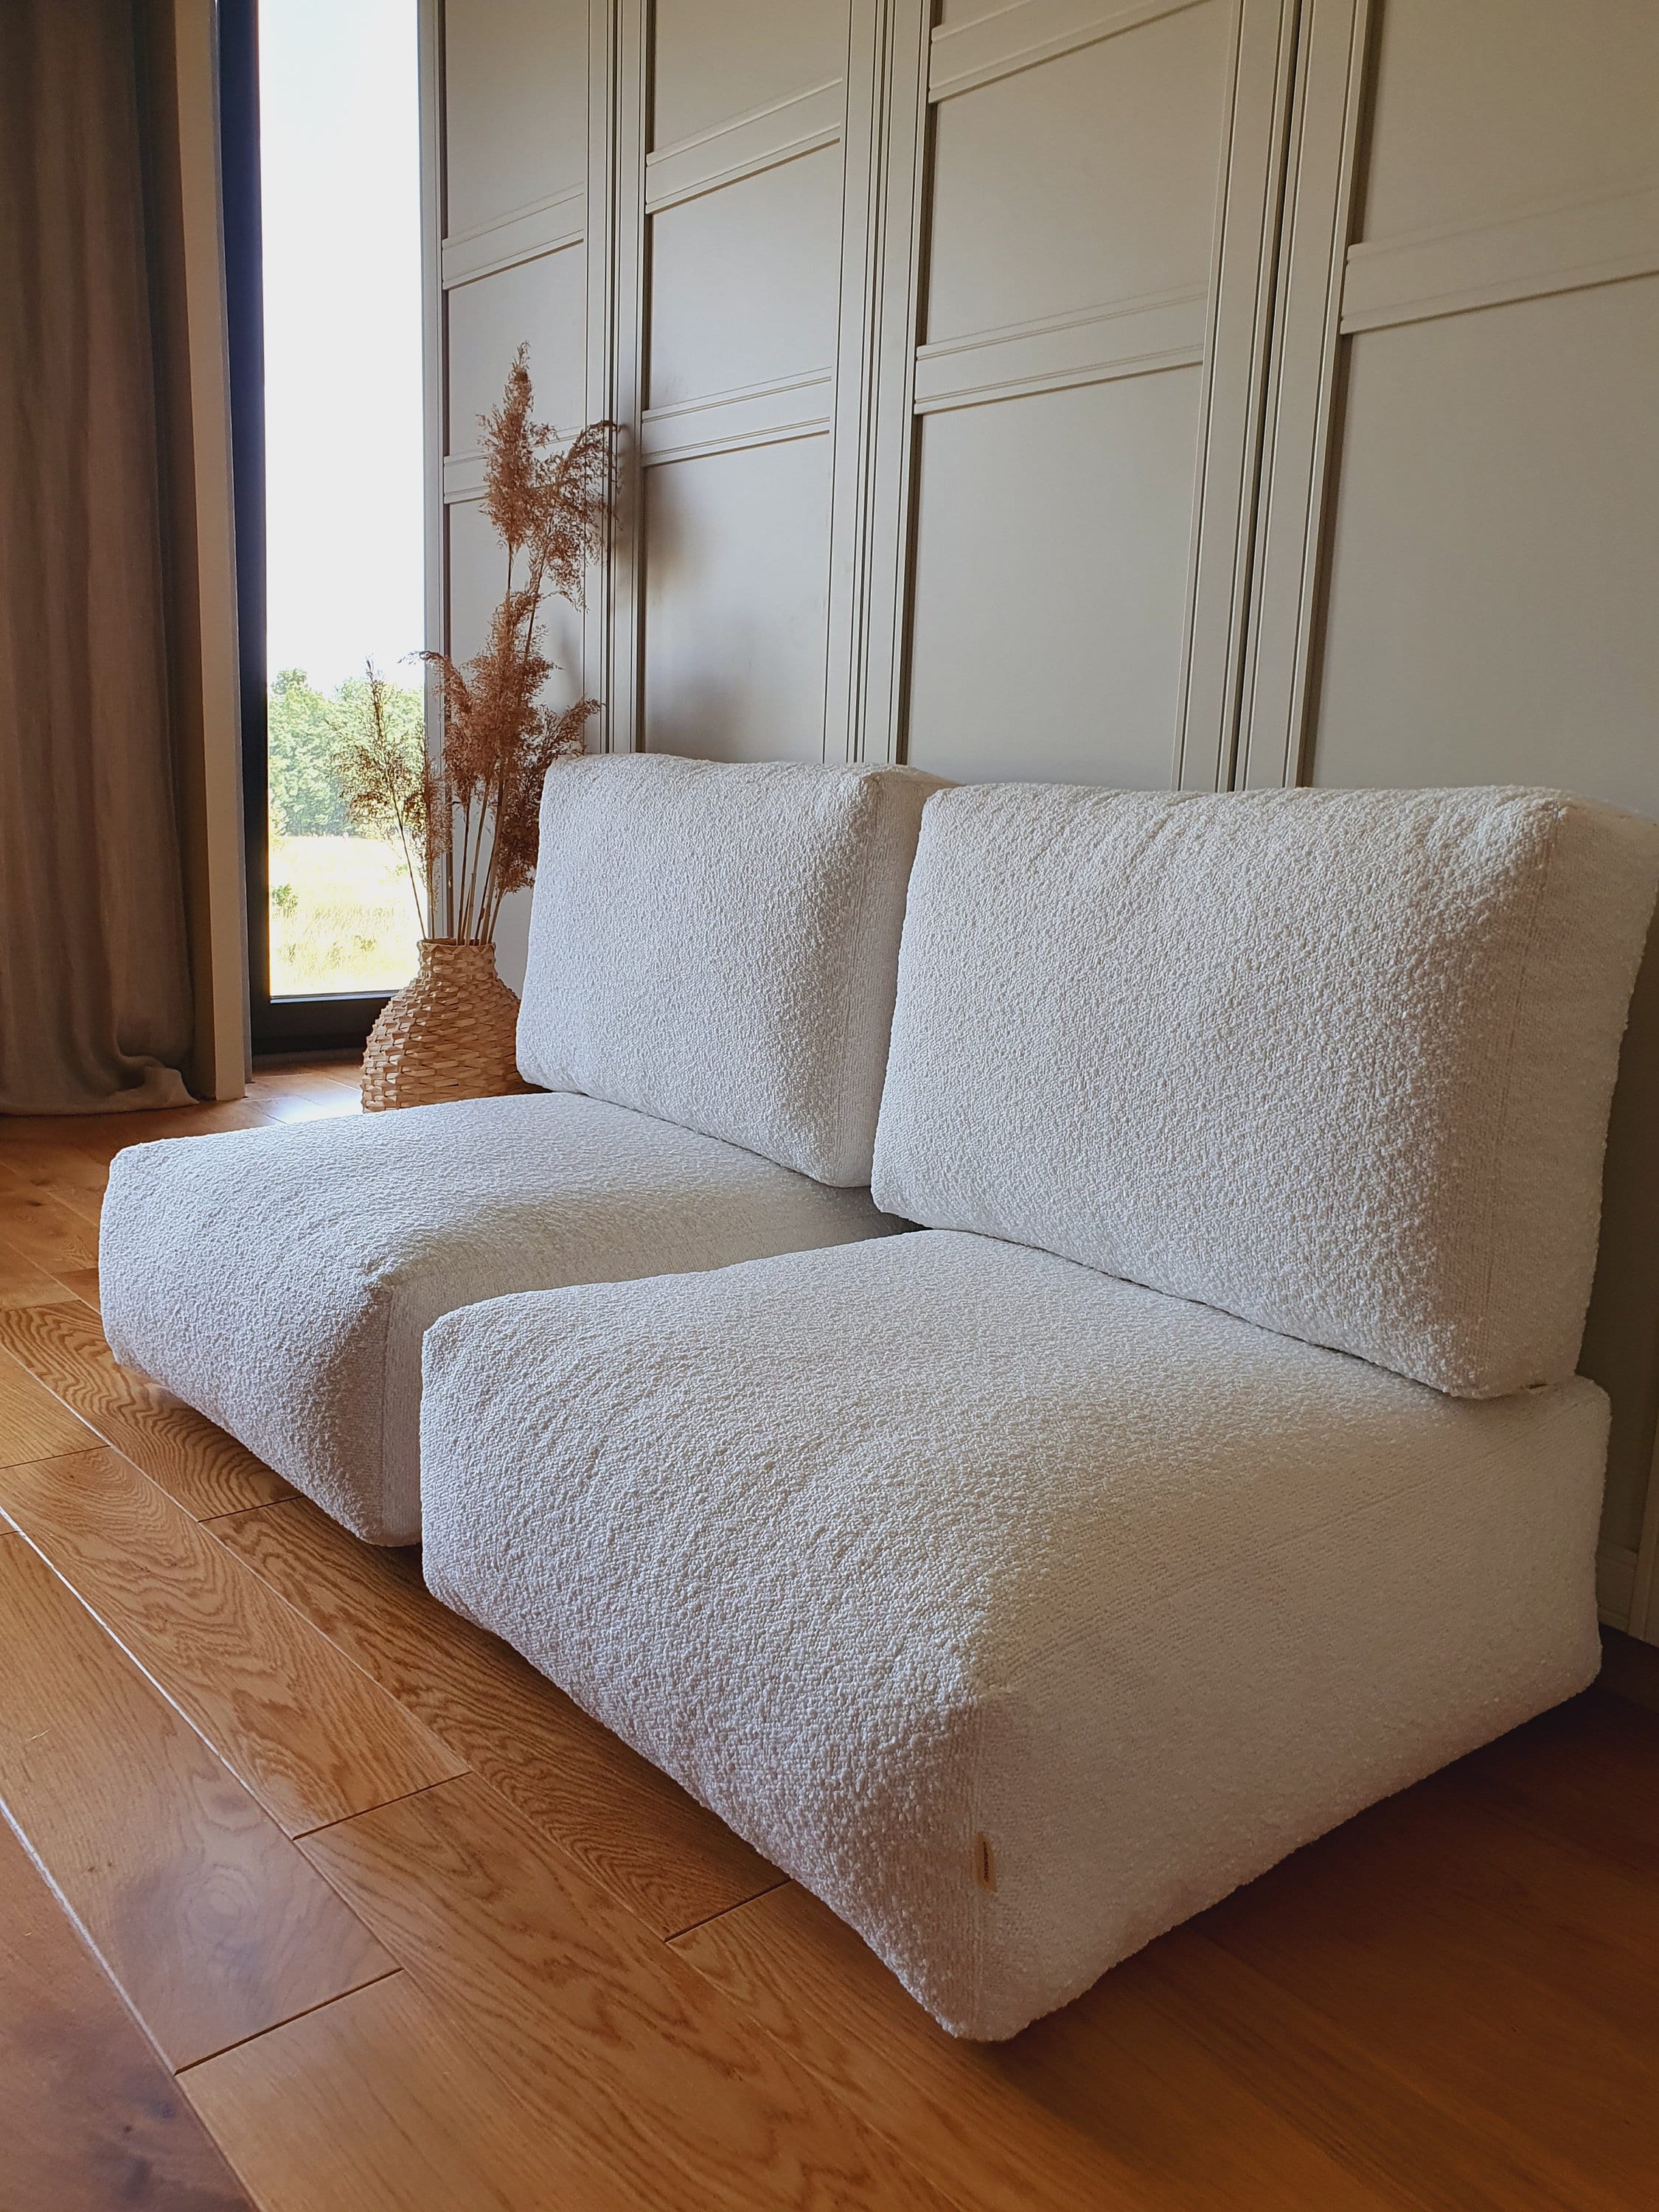 OffWhite Boucle Floor Sofa Lounge Chair Soft Cushion Single